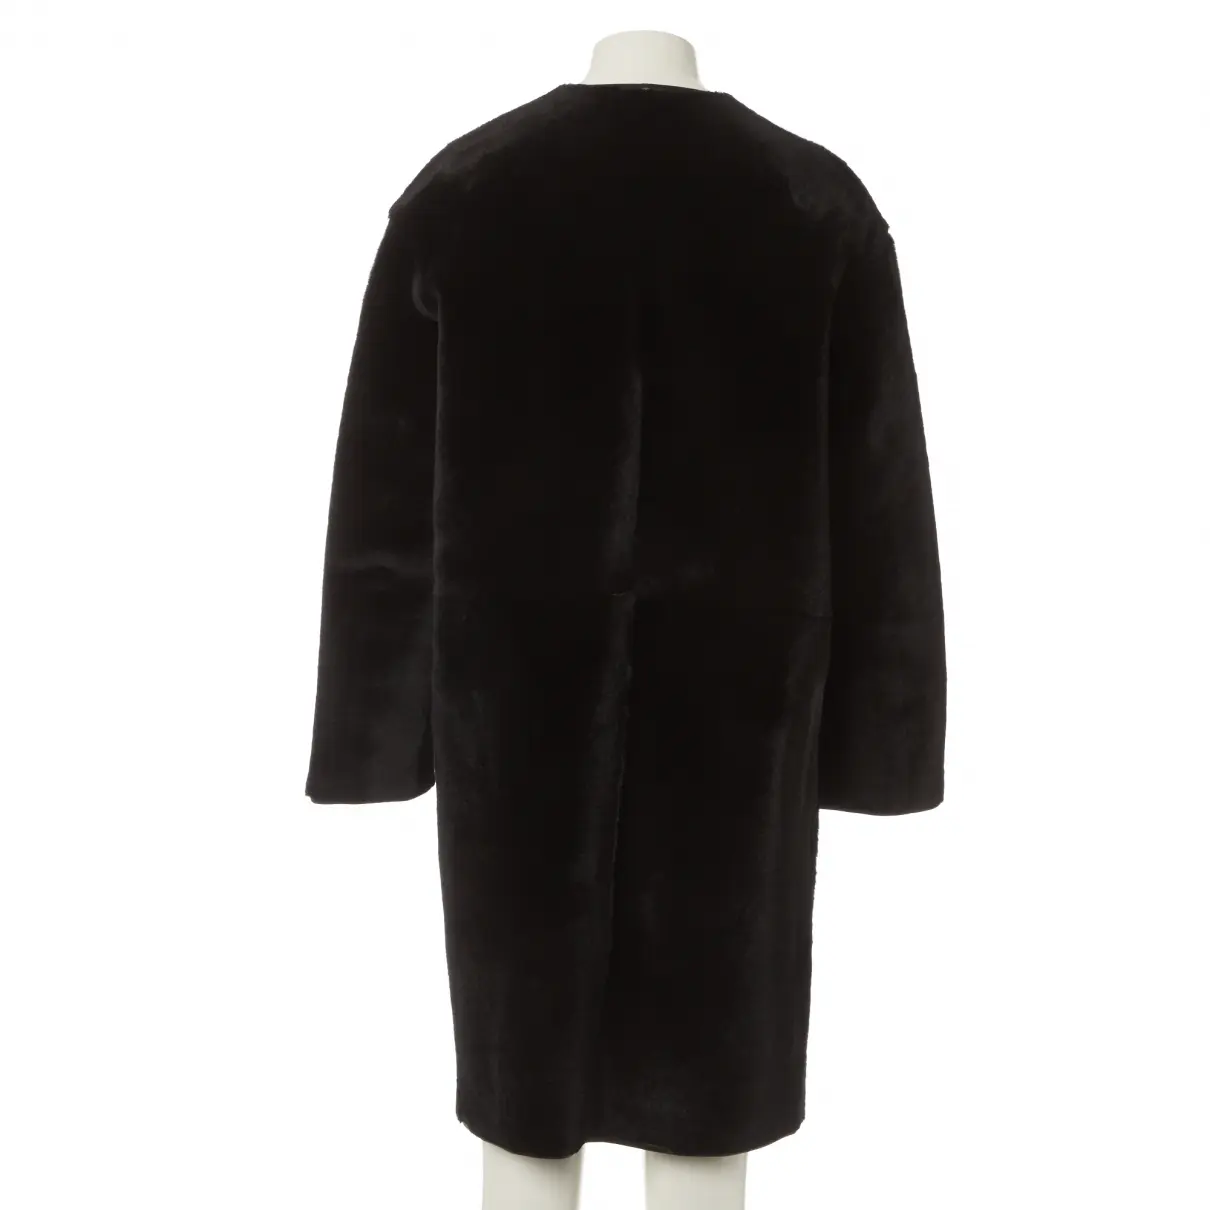 Buy Celine Shearling coat online